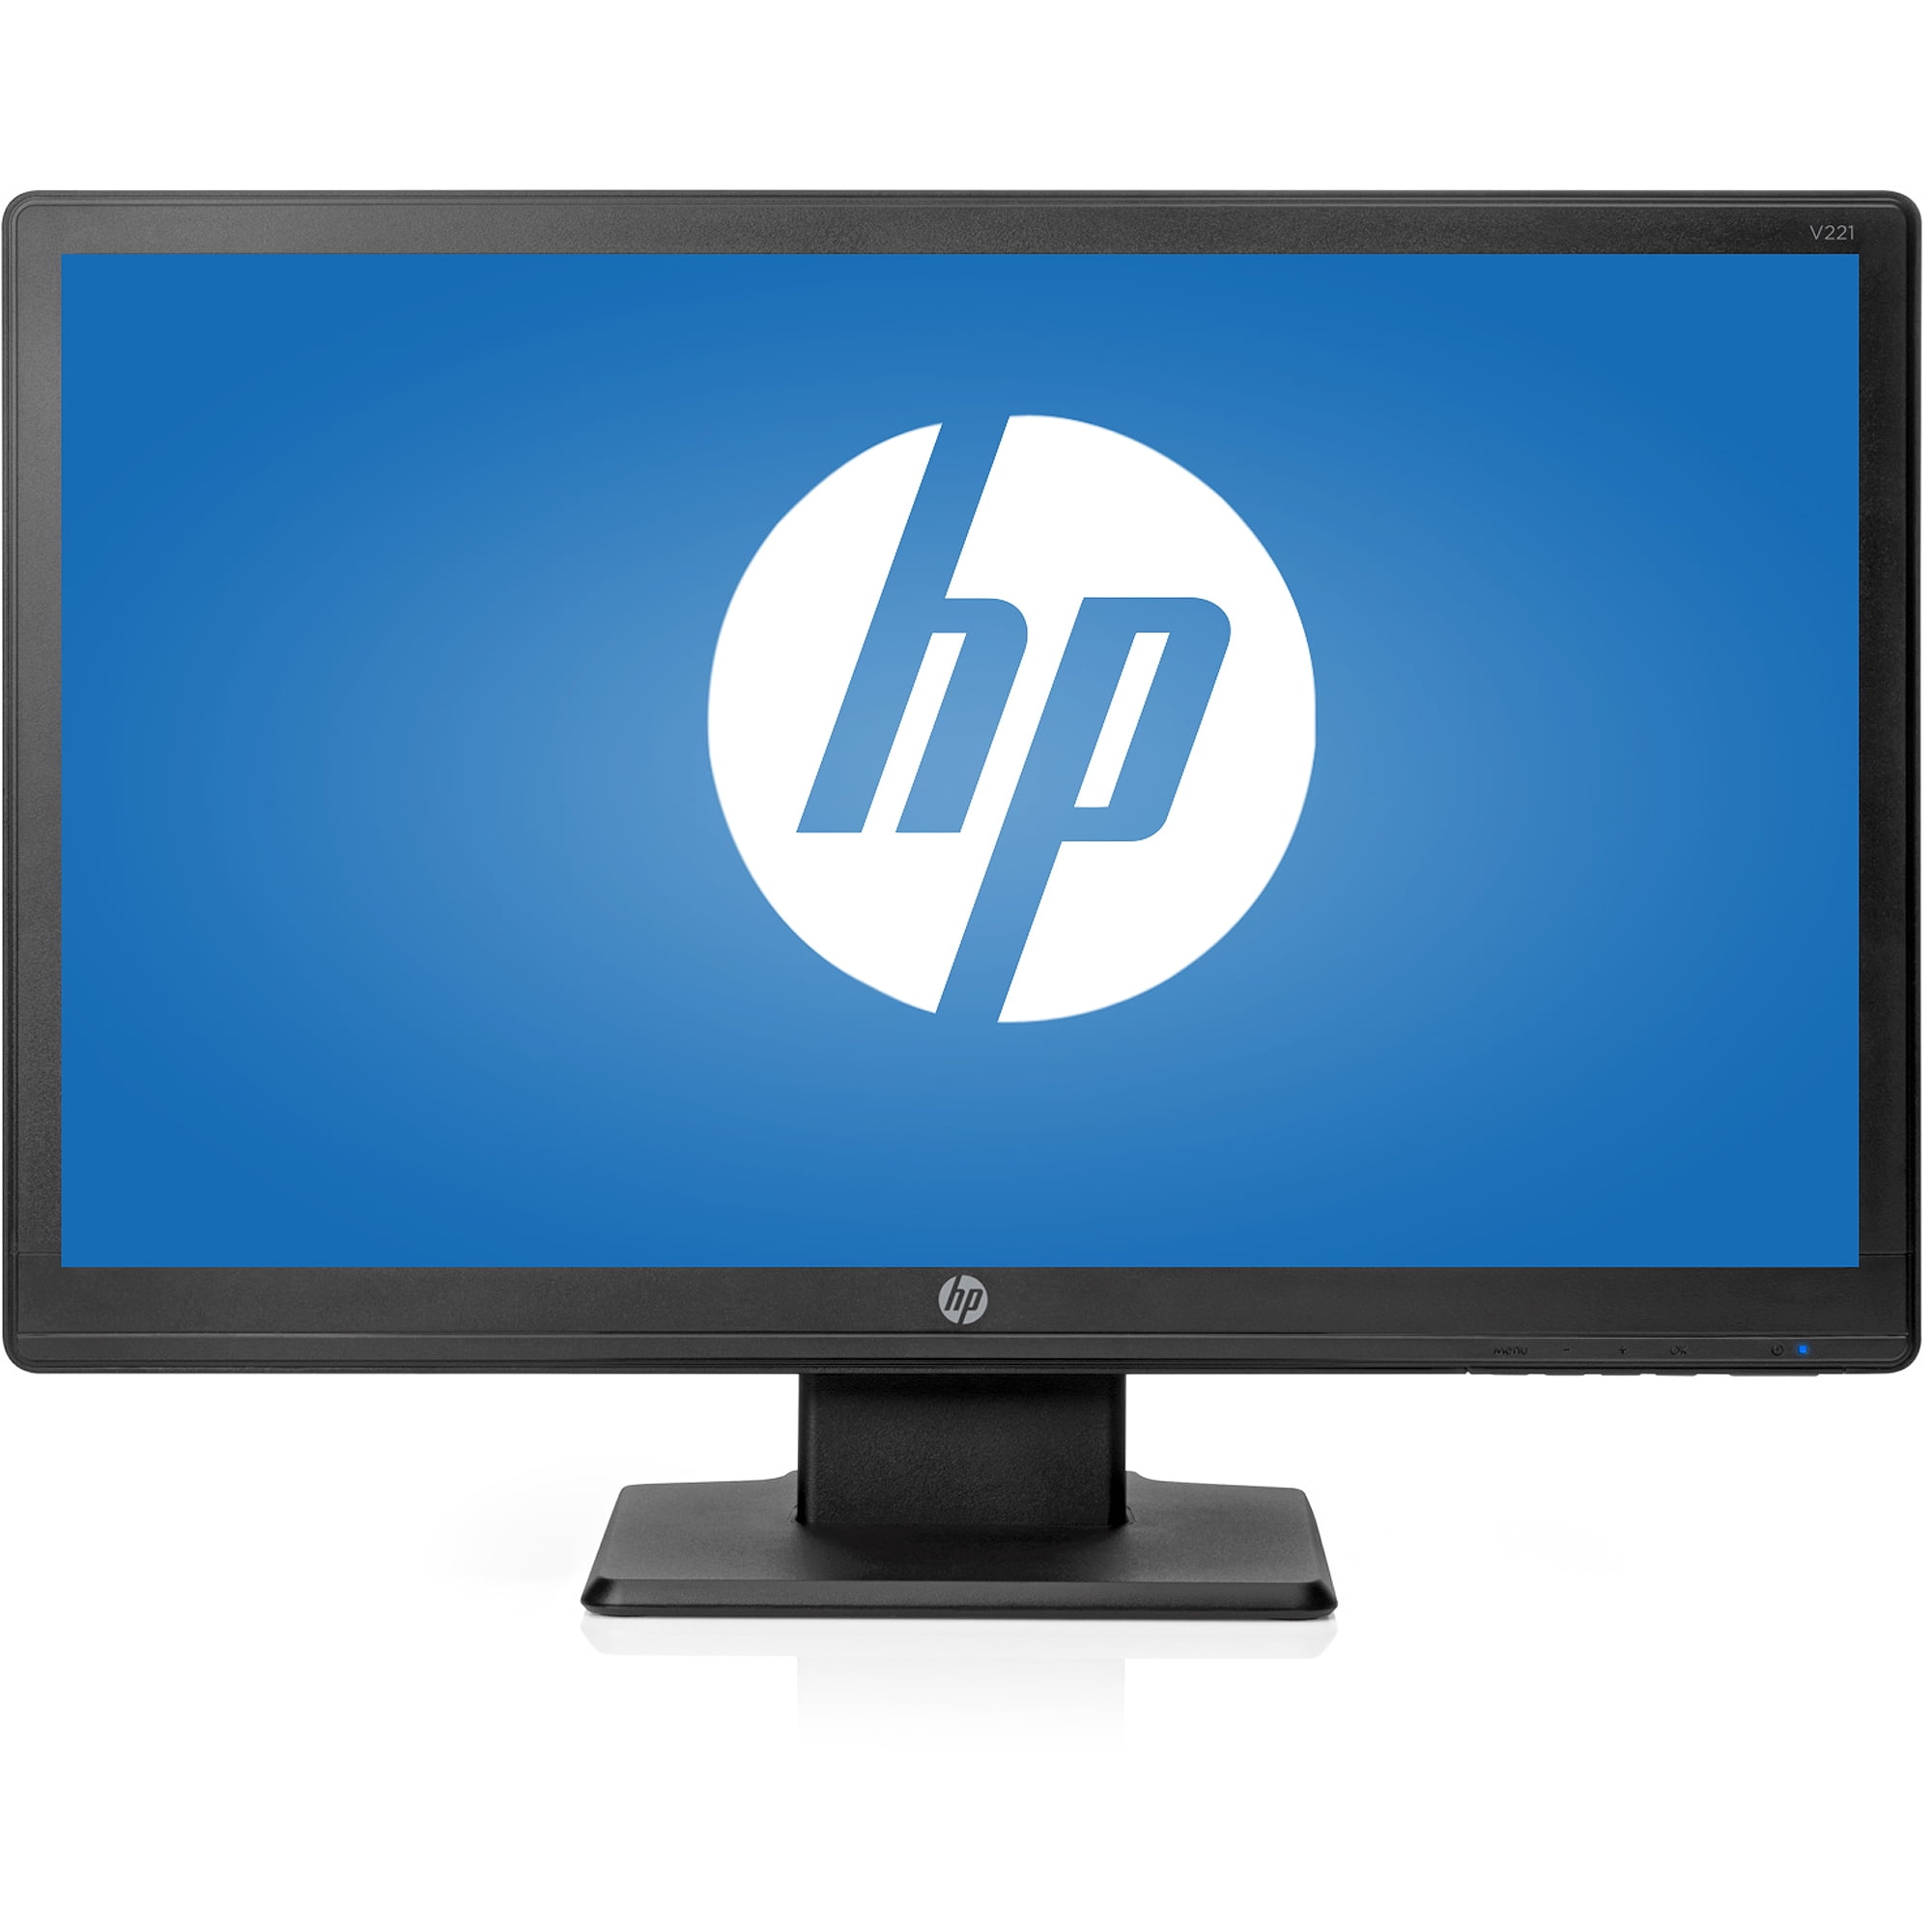 HP 21.5 LED LCD Widescreen Monitor (V221 Black)